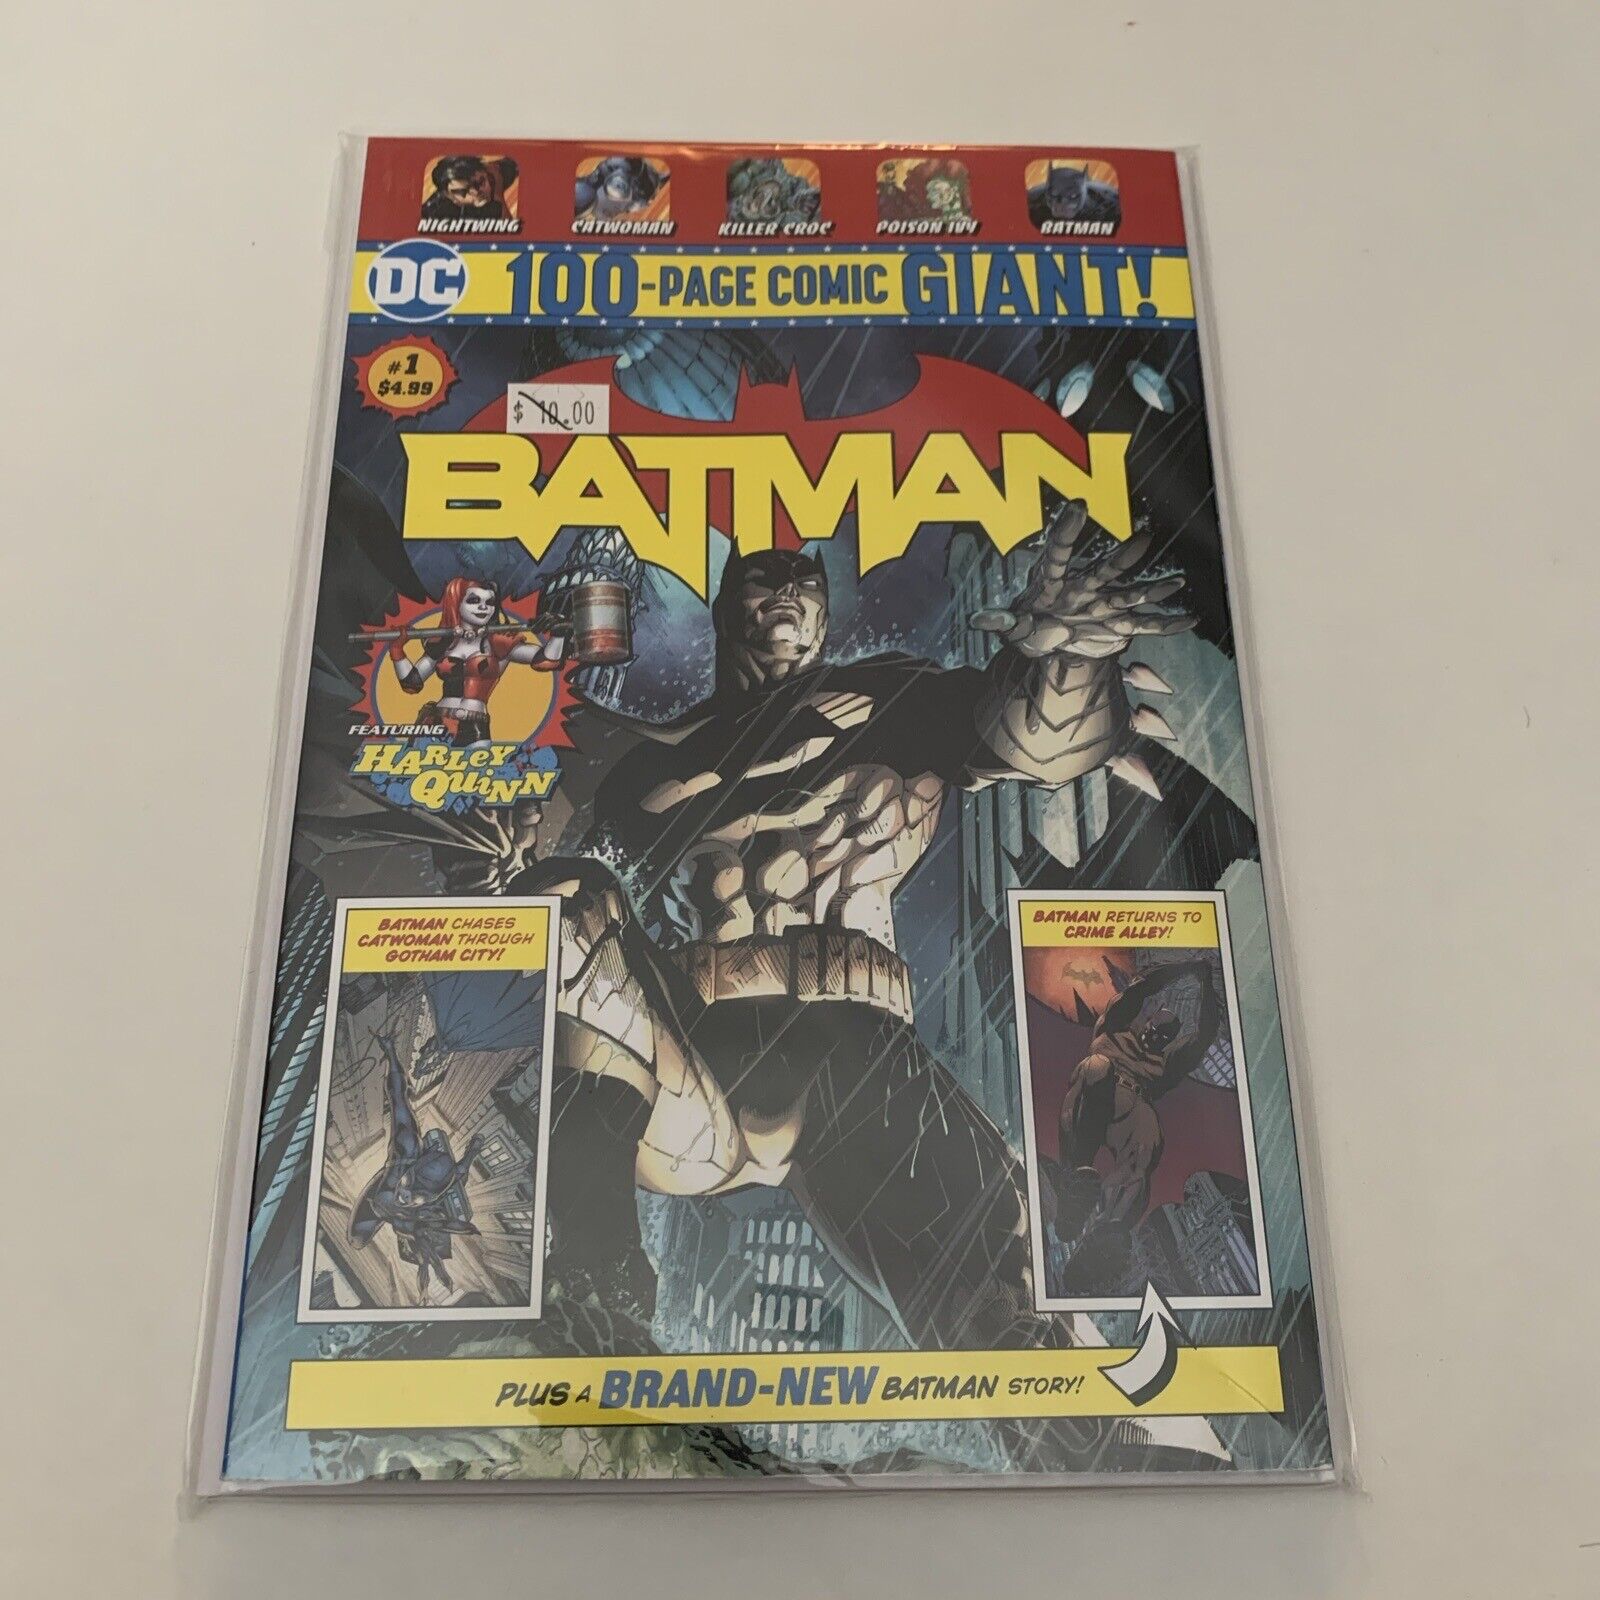 100 page comic giant Batman featuring Harley Quinn (2018)